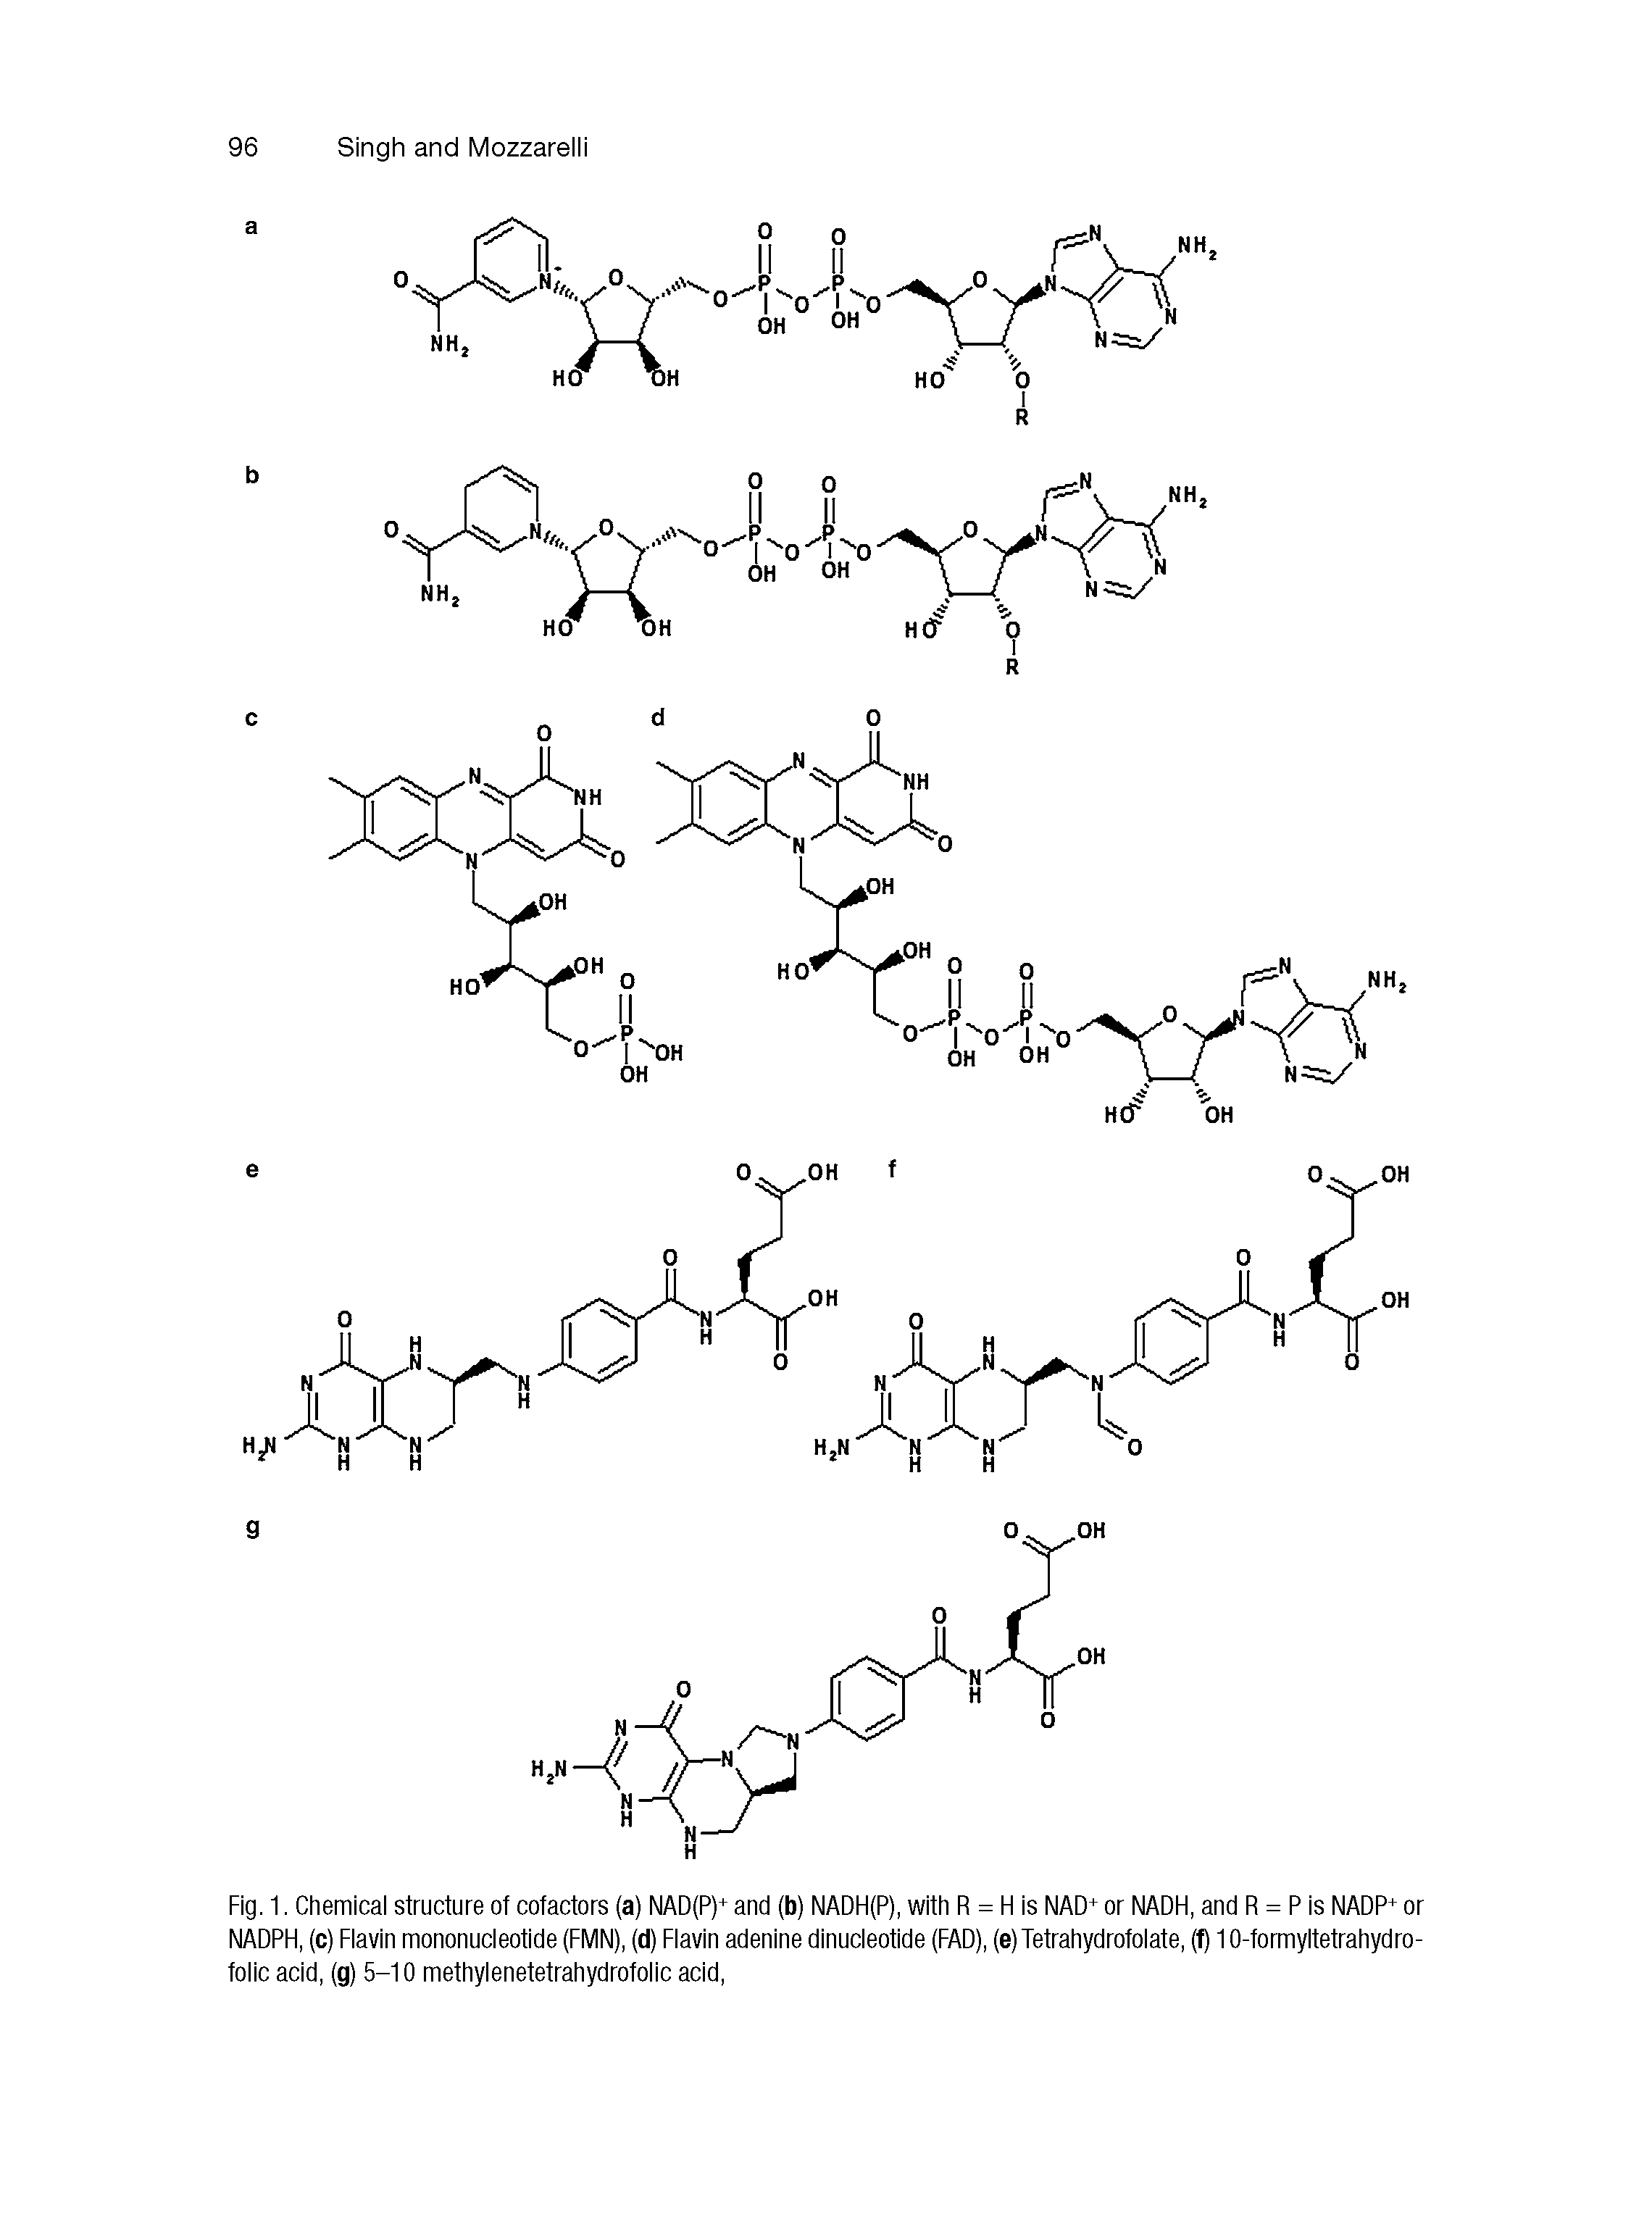 Fig. 1. Chemical structure of cofactors (a) NAD(P)+ and (b) NADH(P), with R = H is NAD+ or NADH, and R = P is NADP+ or NADPH, (c) Flavin mononucleotide (FMN), (d) Flavin adenine dinucleotide (FAD), (e)Tetrahydrofolate, (f) 10-formyltetrahydro-folic acid, (g) 5-10 methylenetetrahydrofolic acid,...